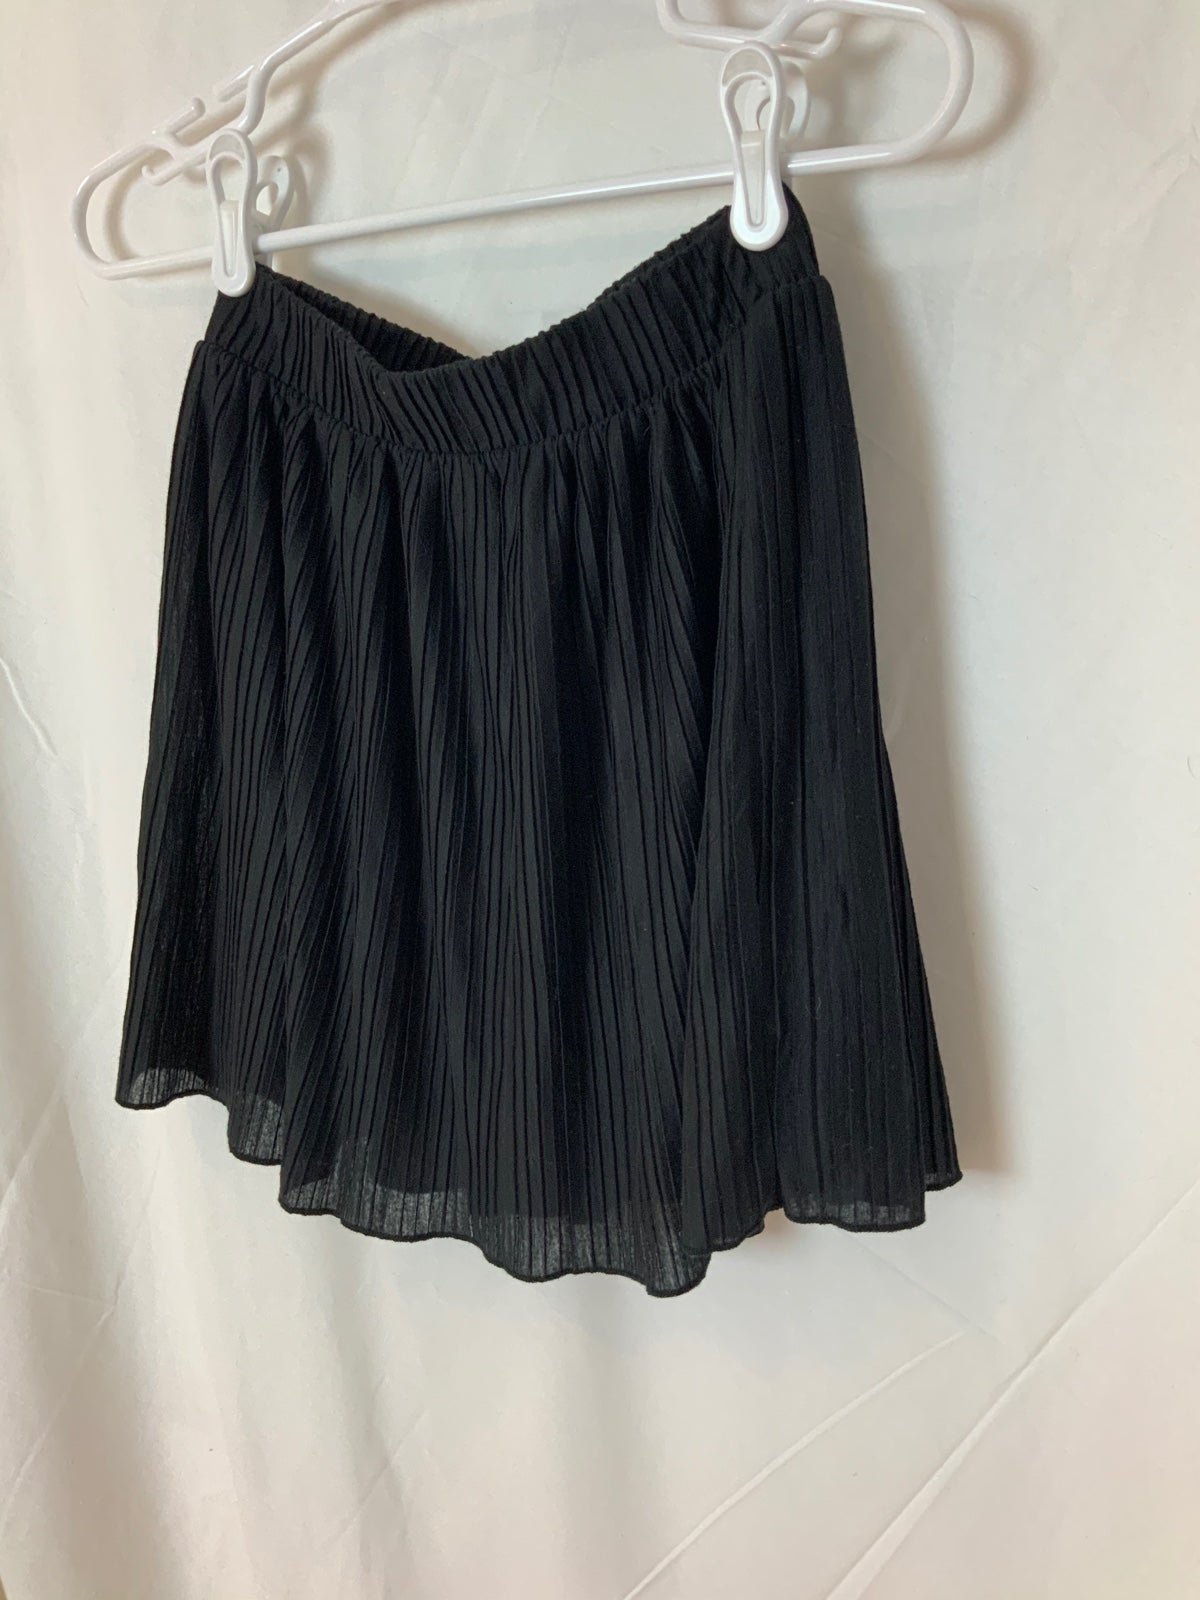 large discount Trafaluc black flair mini skirt size med